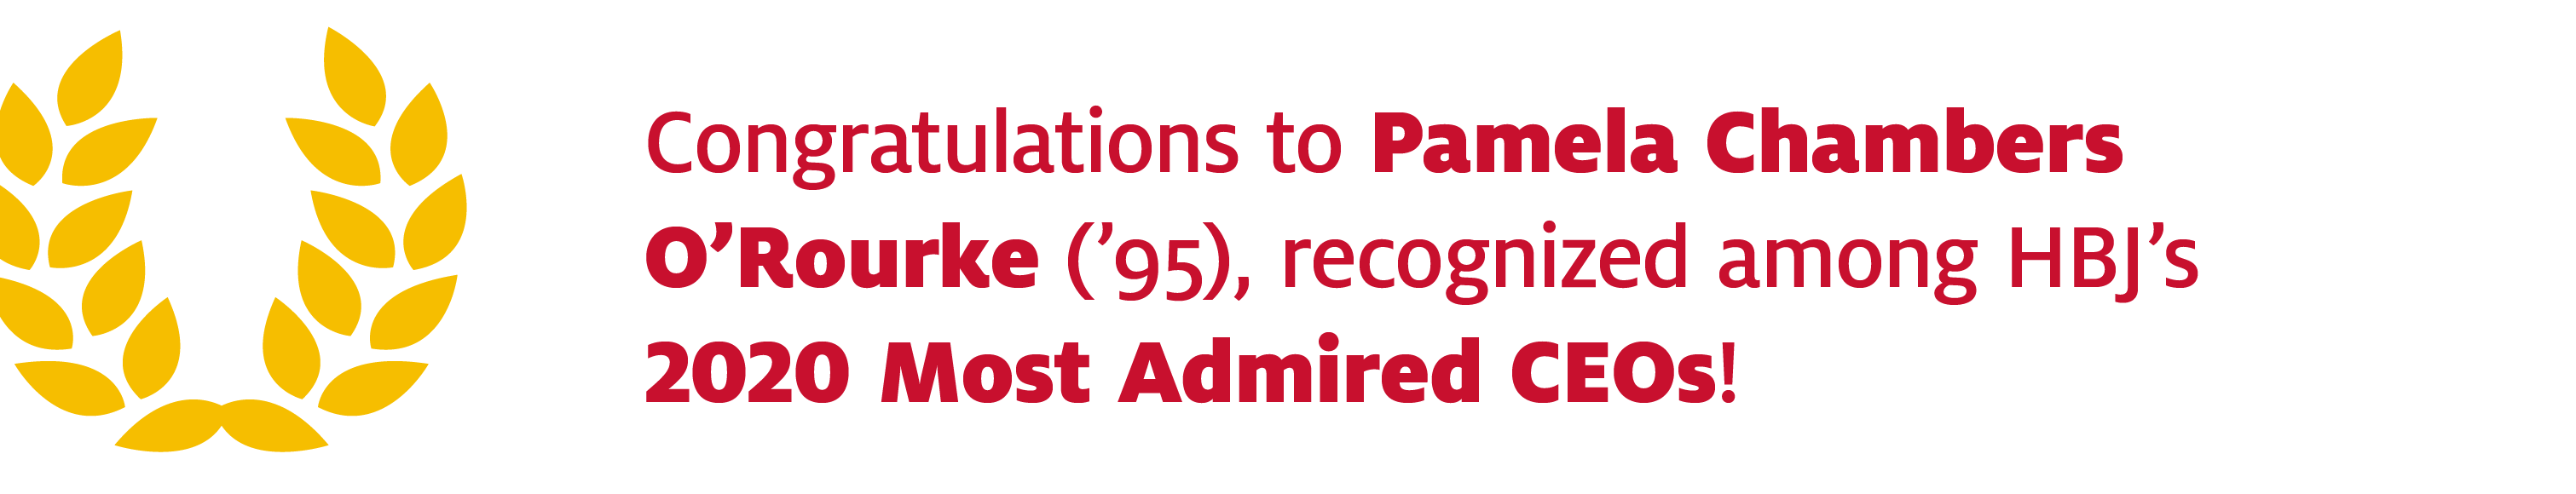 Congratulations Pamela Chambers O’Rourke